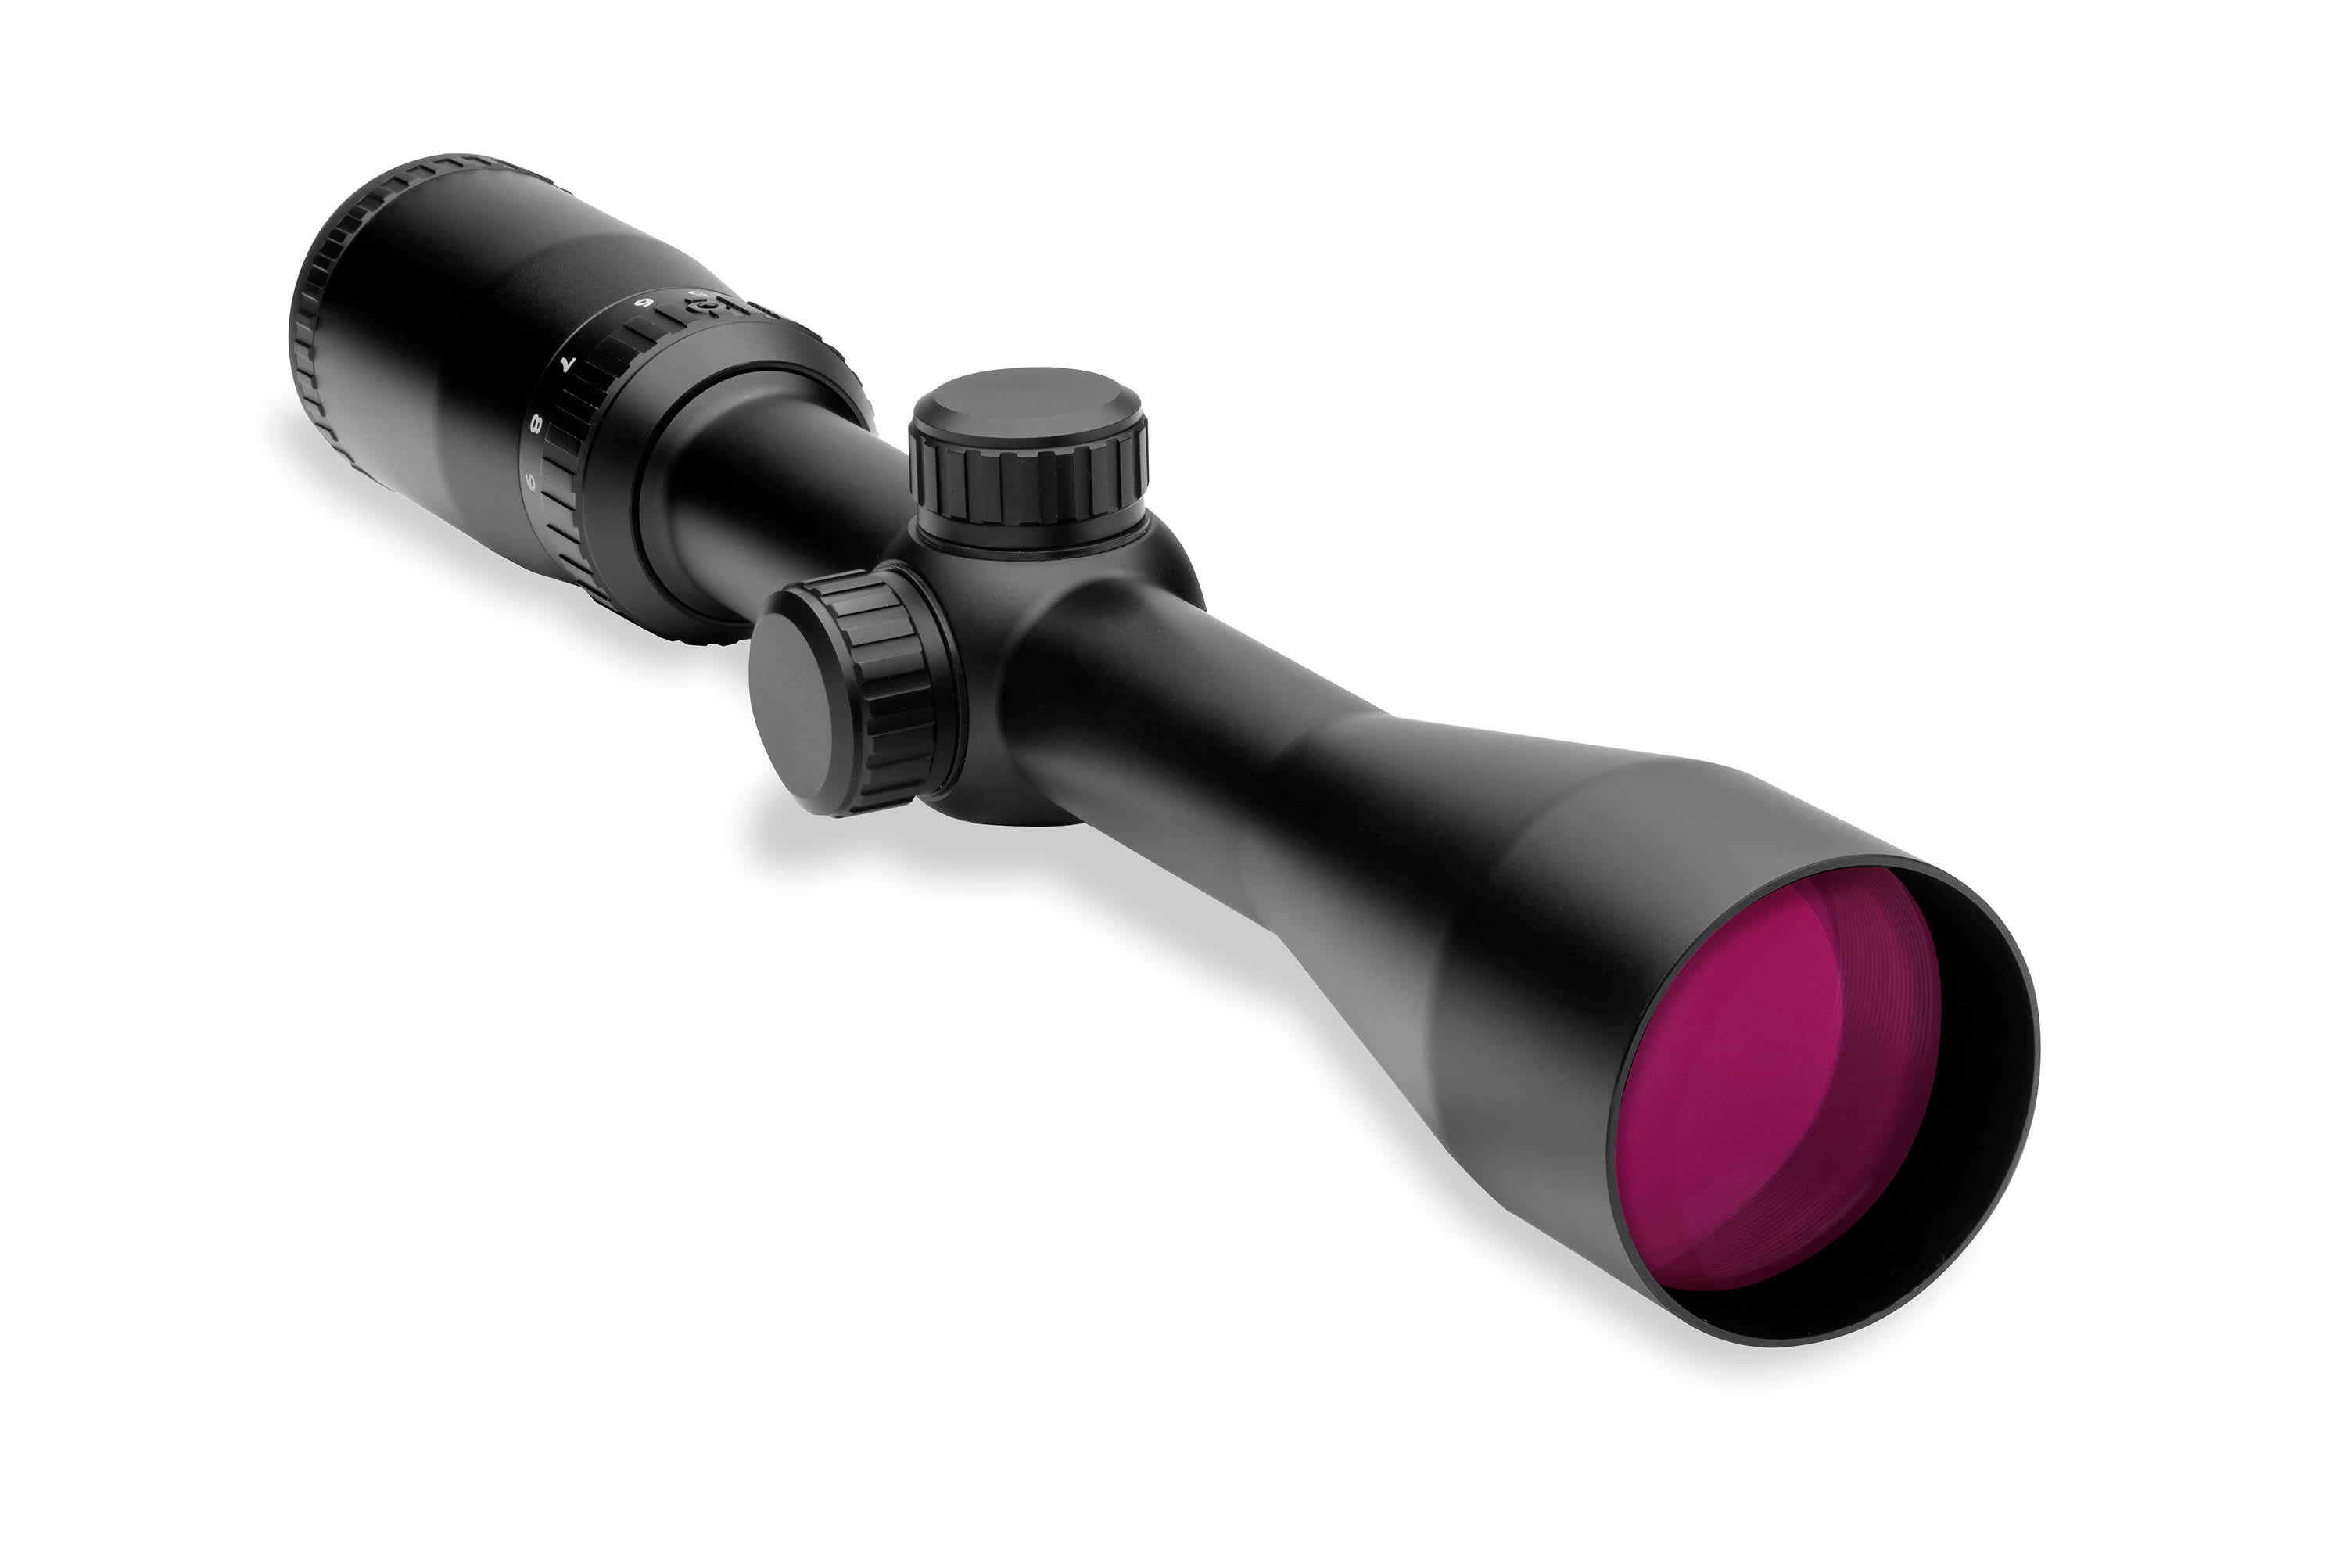 Burris® Prevail Riflescopes